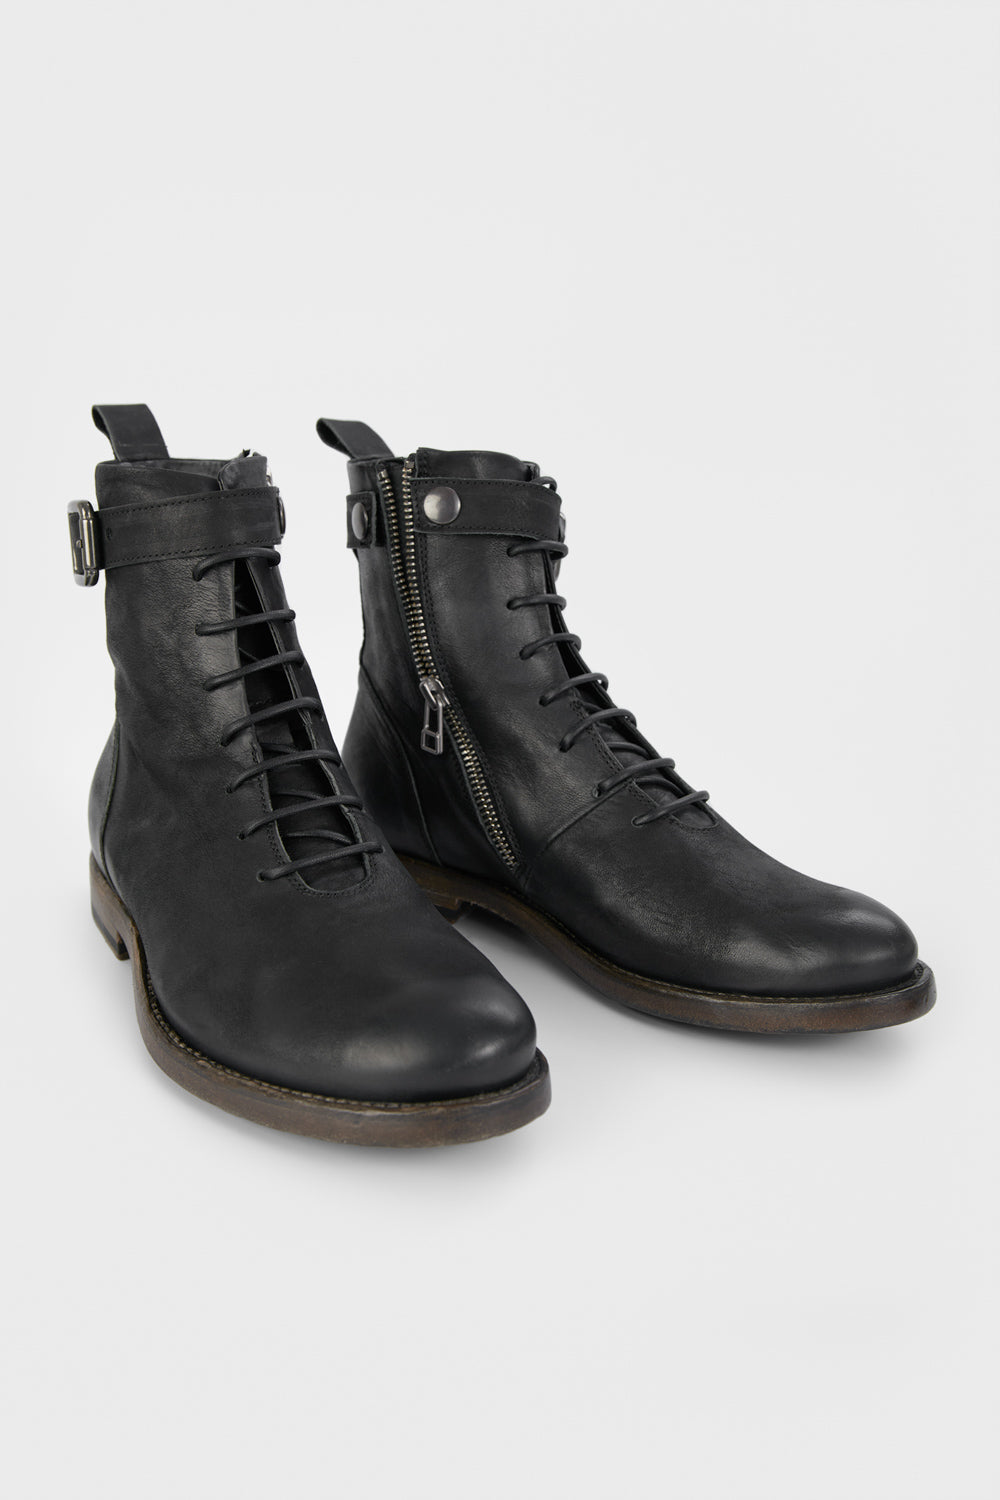 SLOANE matte-black lace-up buckle boots.